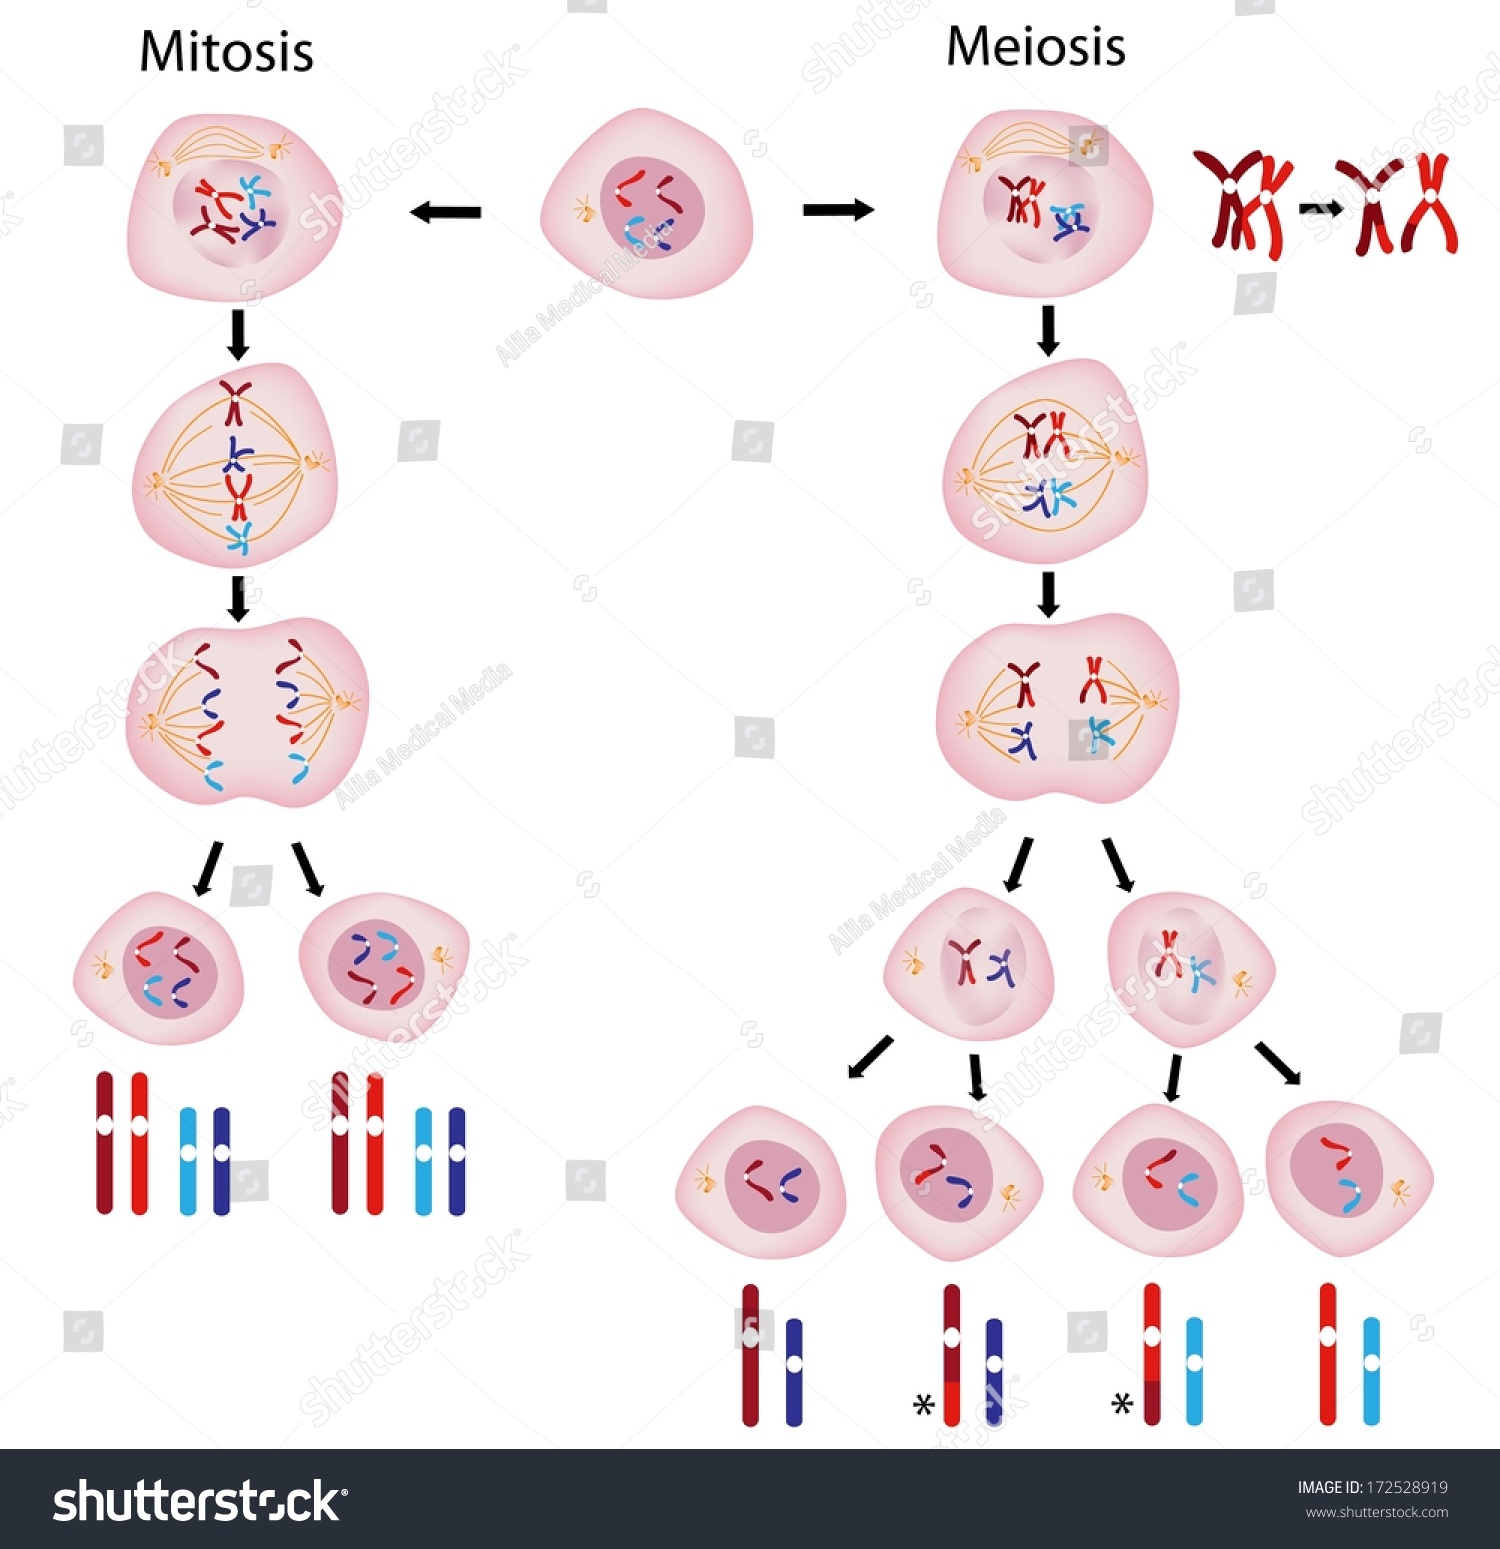 homologous chromosomes mitosis